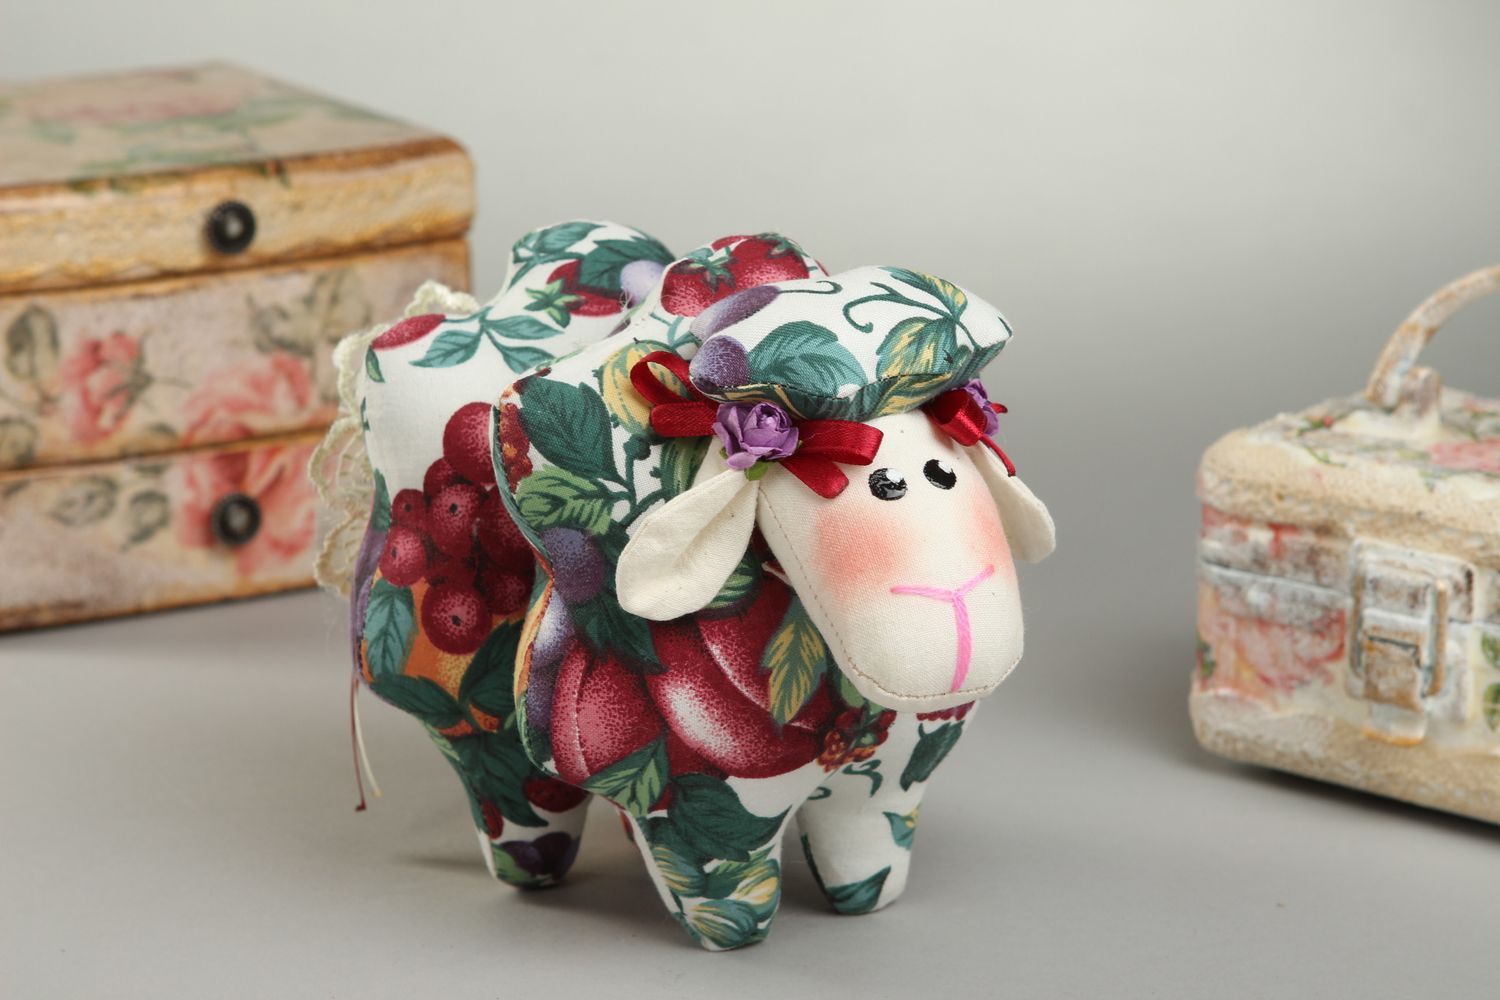 Juguete artesanal con forma de oveja peluche para regalar souvenir original foto 1